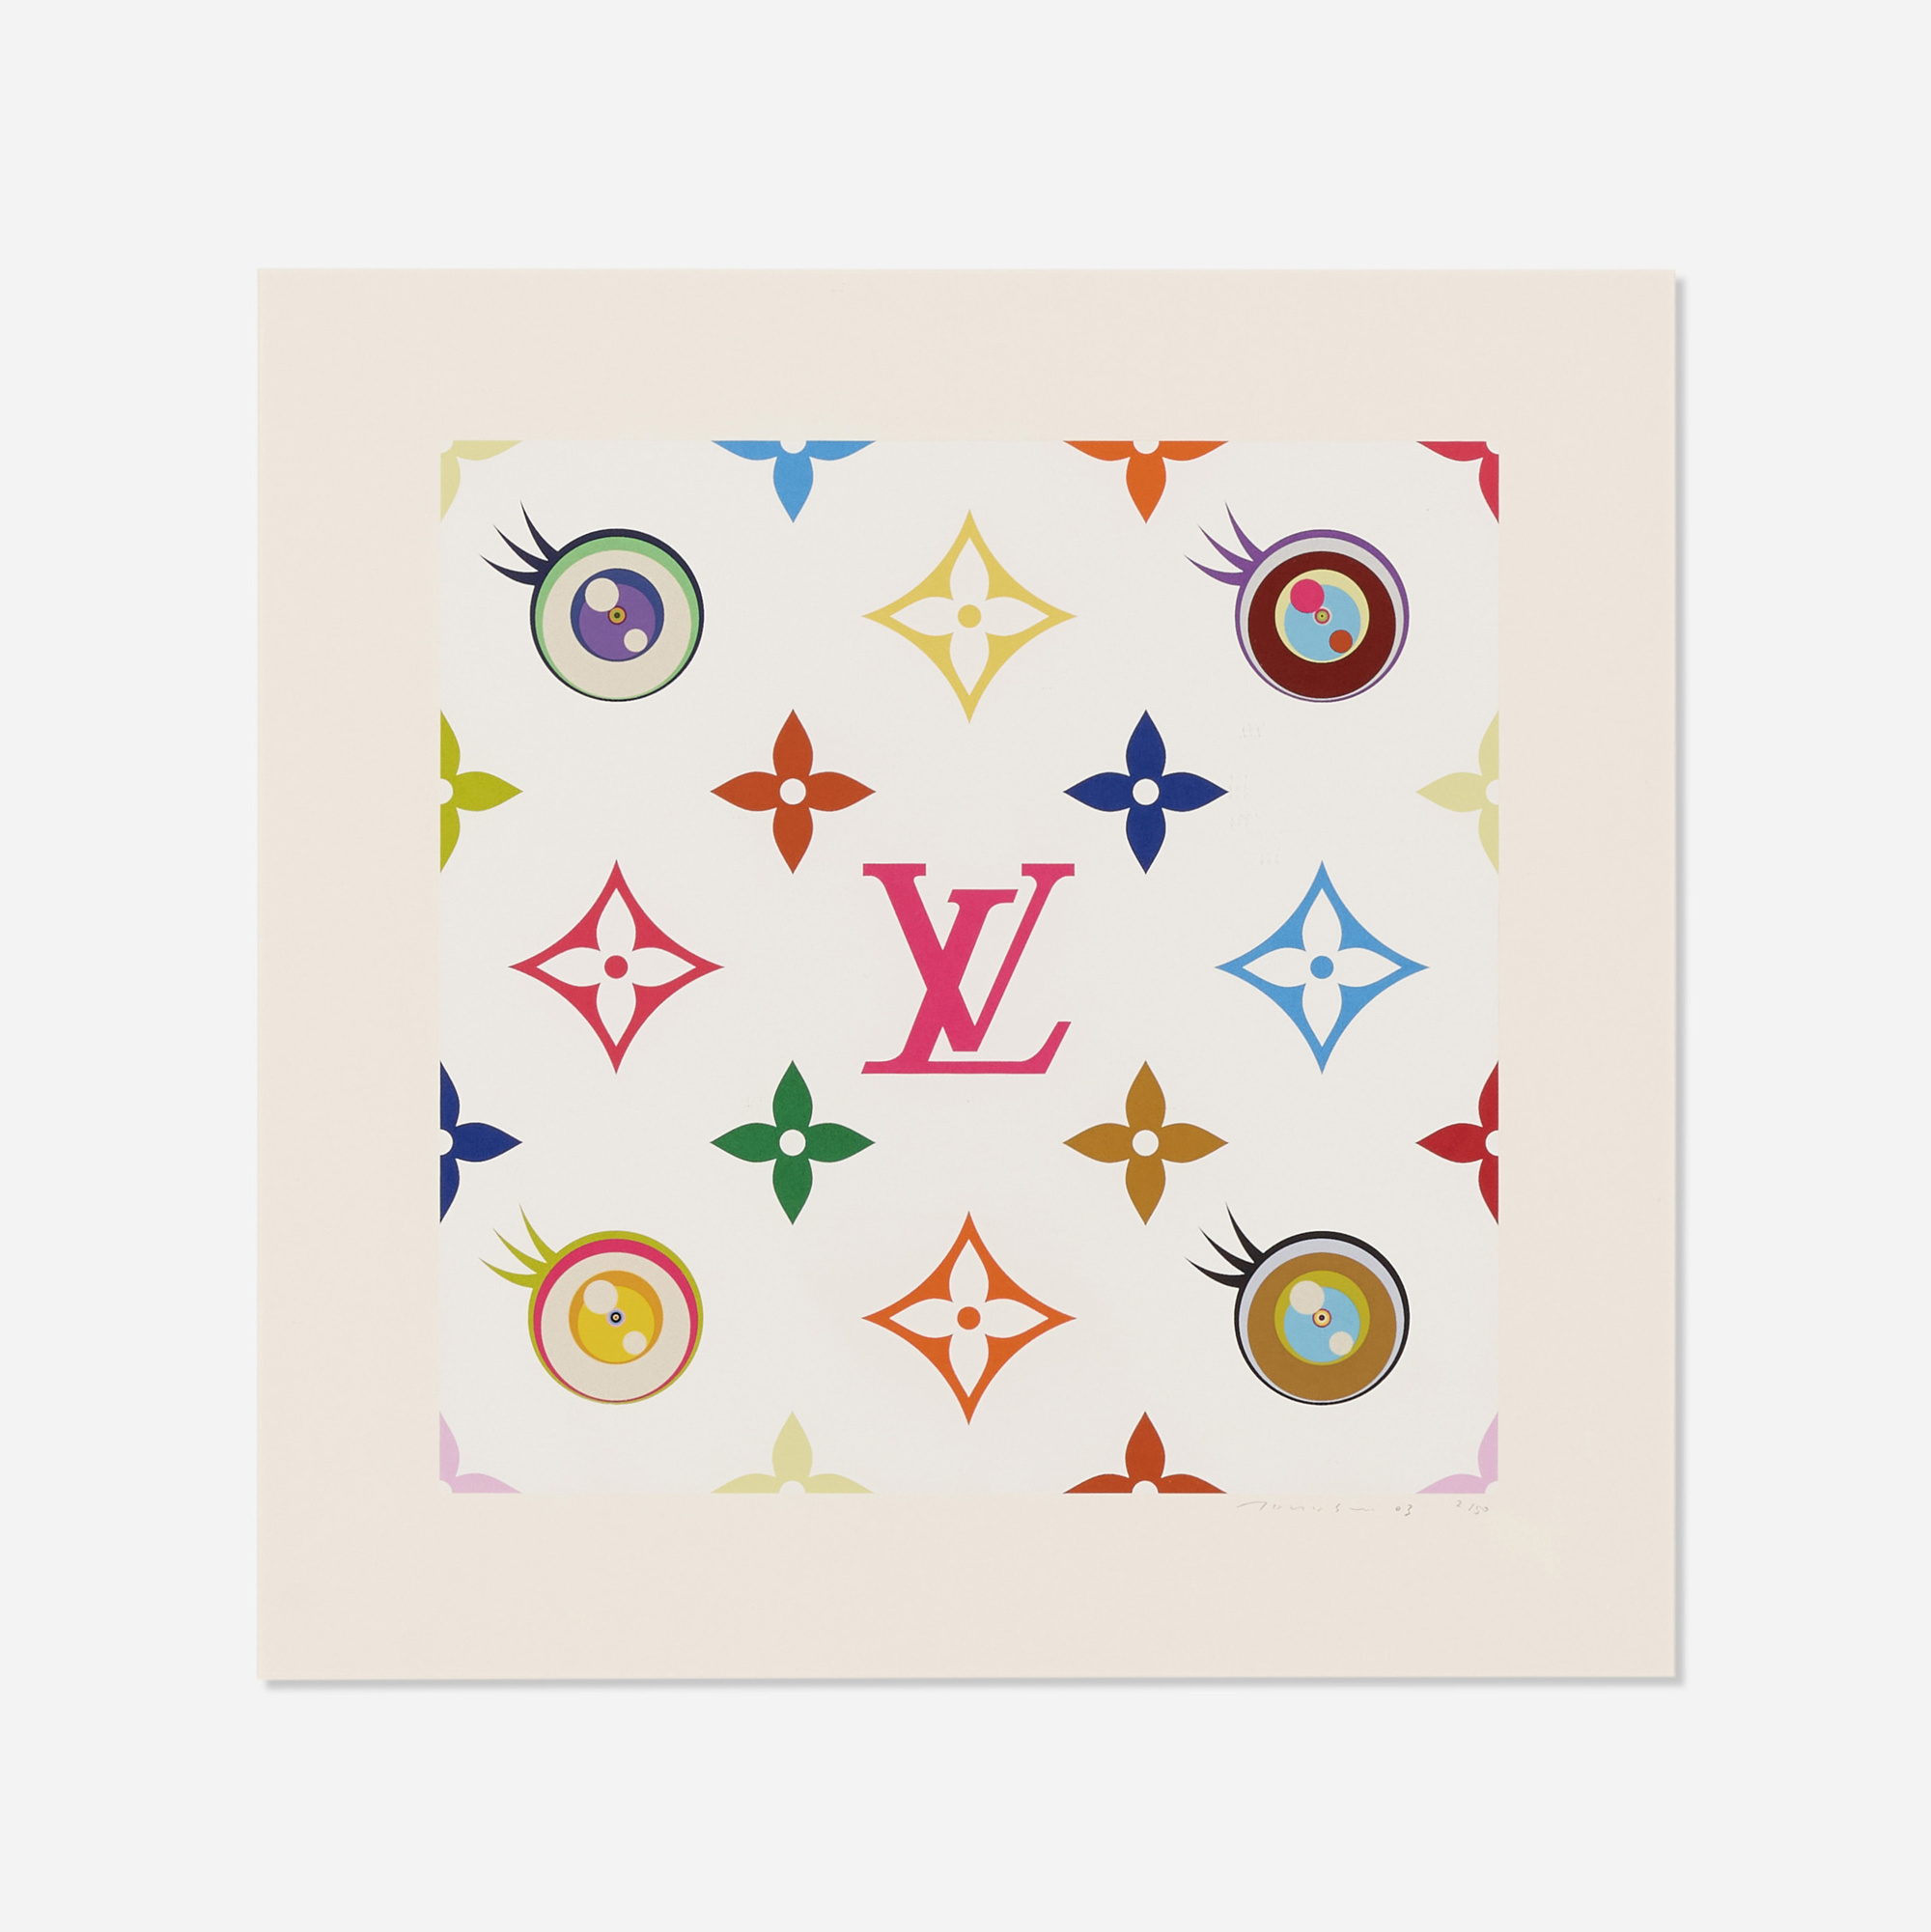 Louis Vuitton By Takashi Murakami, 2003, 2004, & 2014